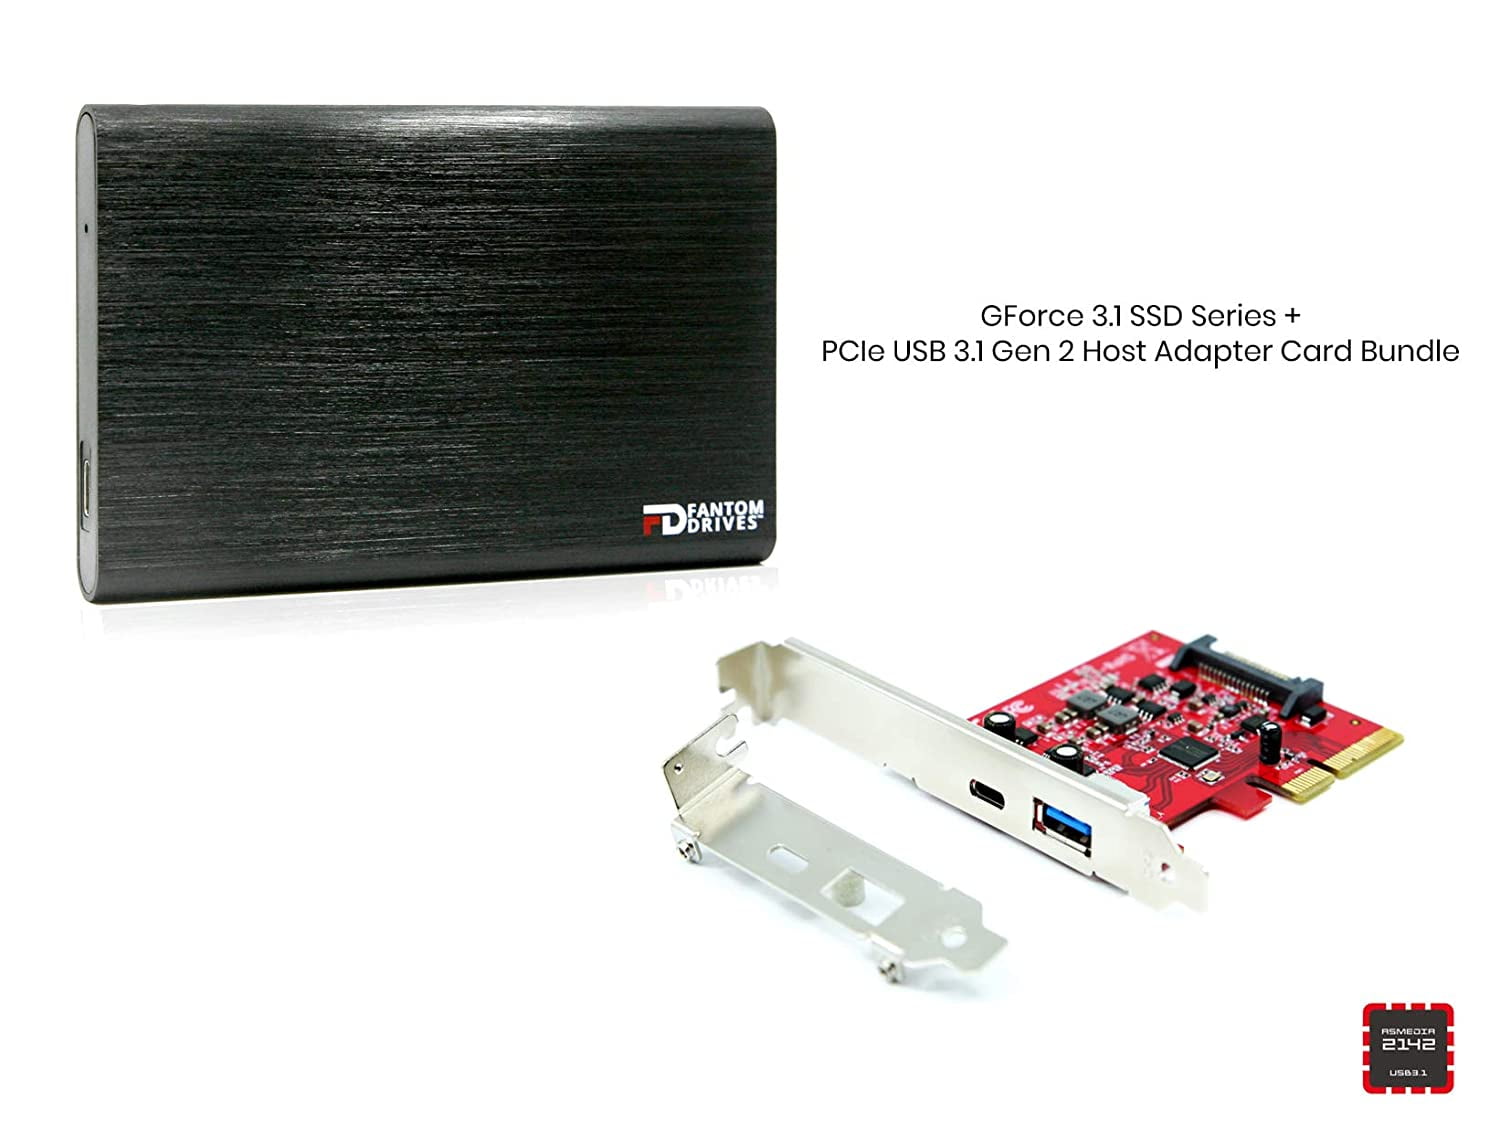 Fantom Drives CSD250B-W-HA Micronet Technology External SSD 250GB 